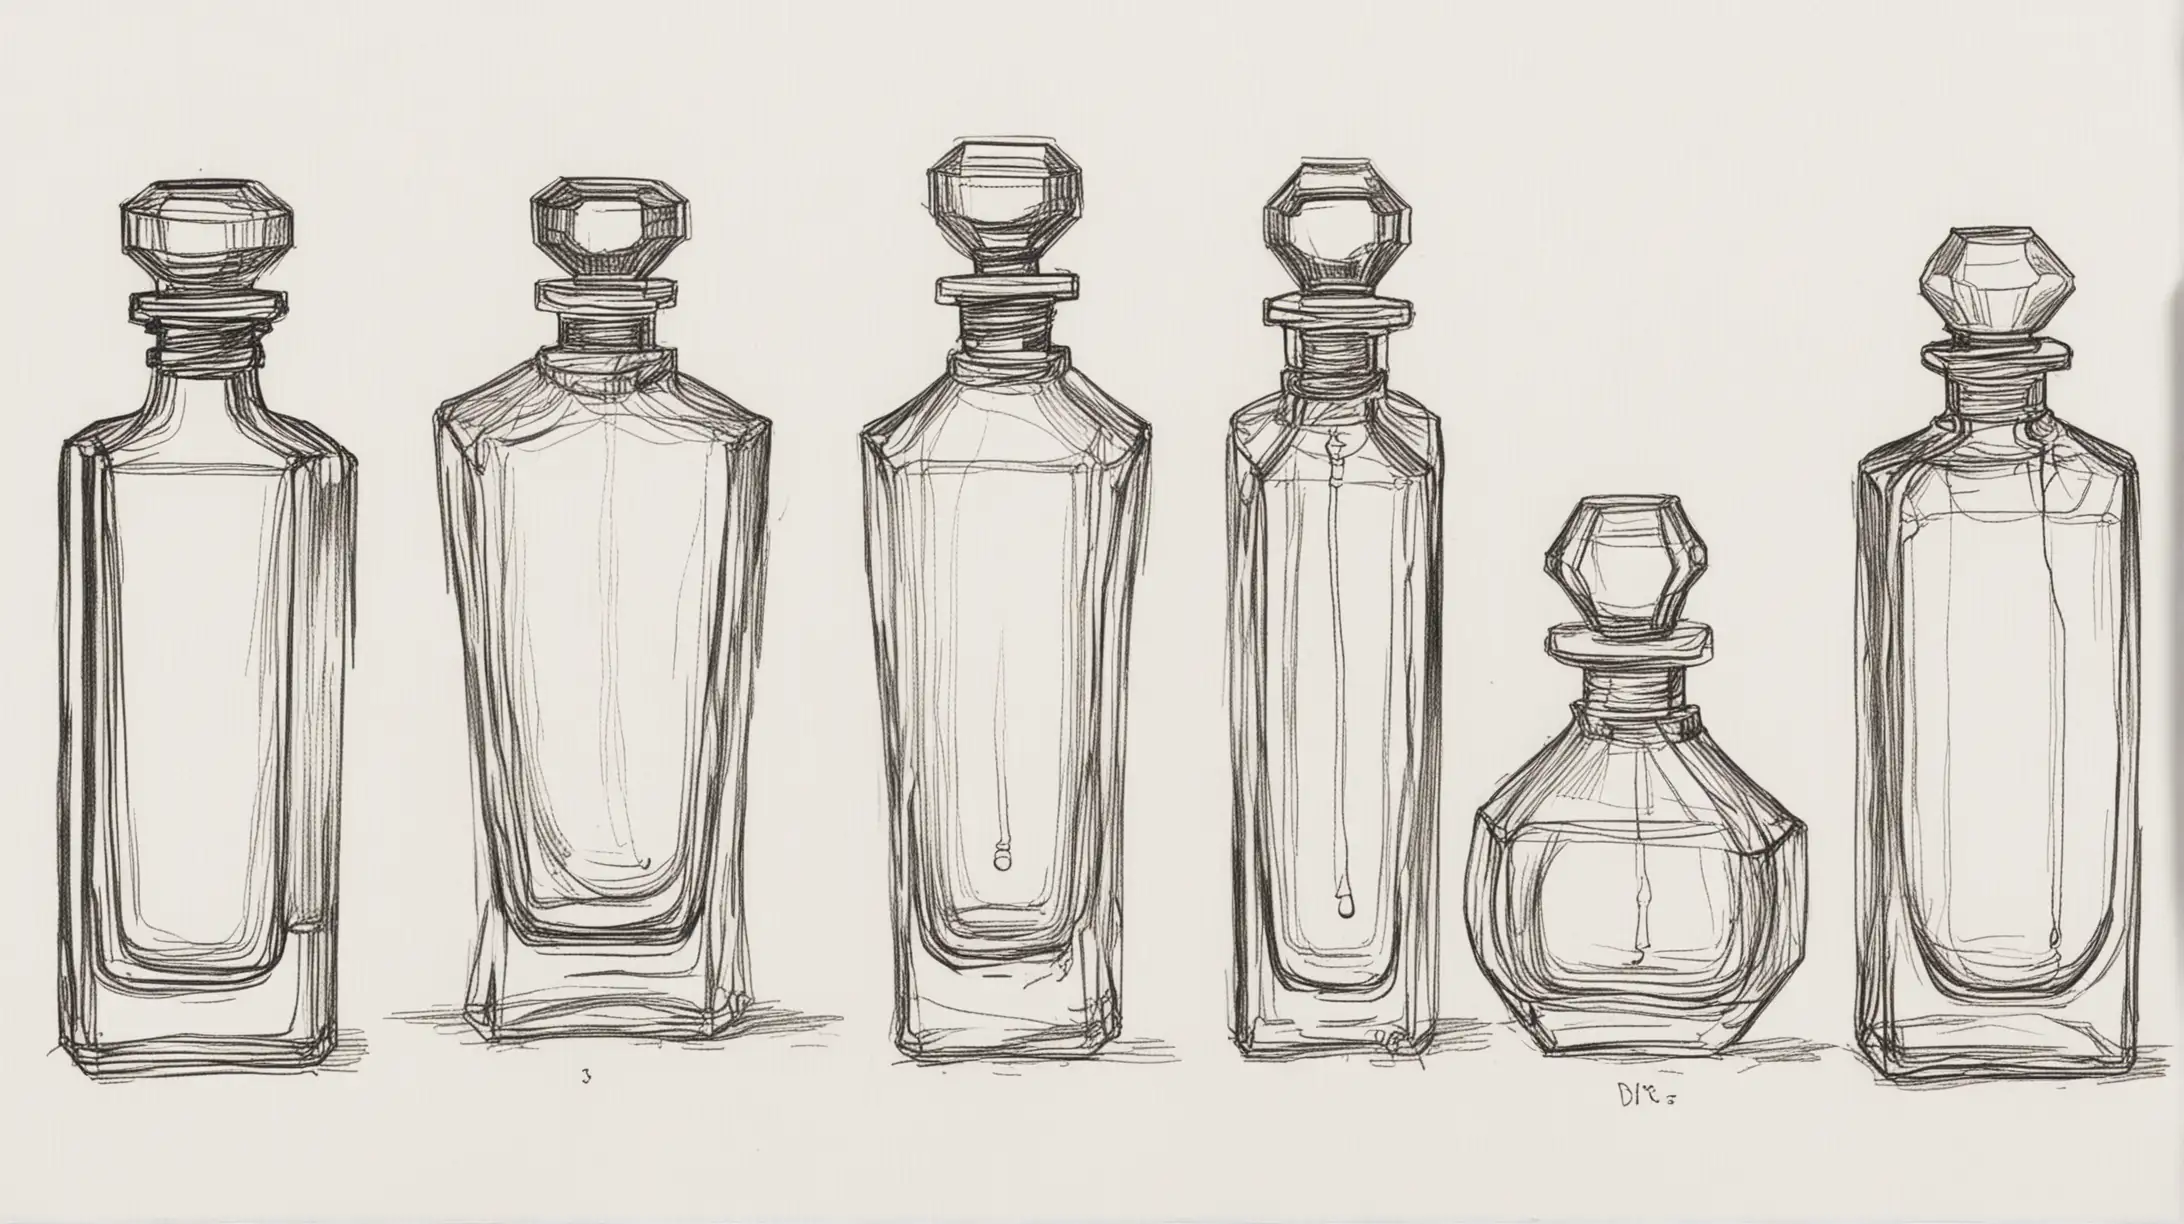 Sketched Perfume Bottles with Elegant Designs